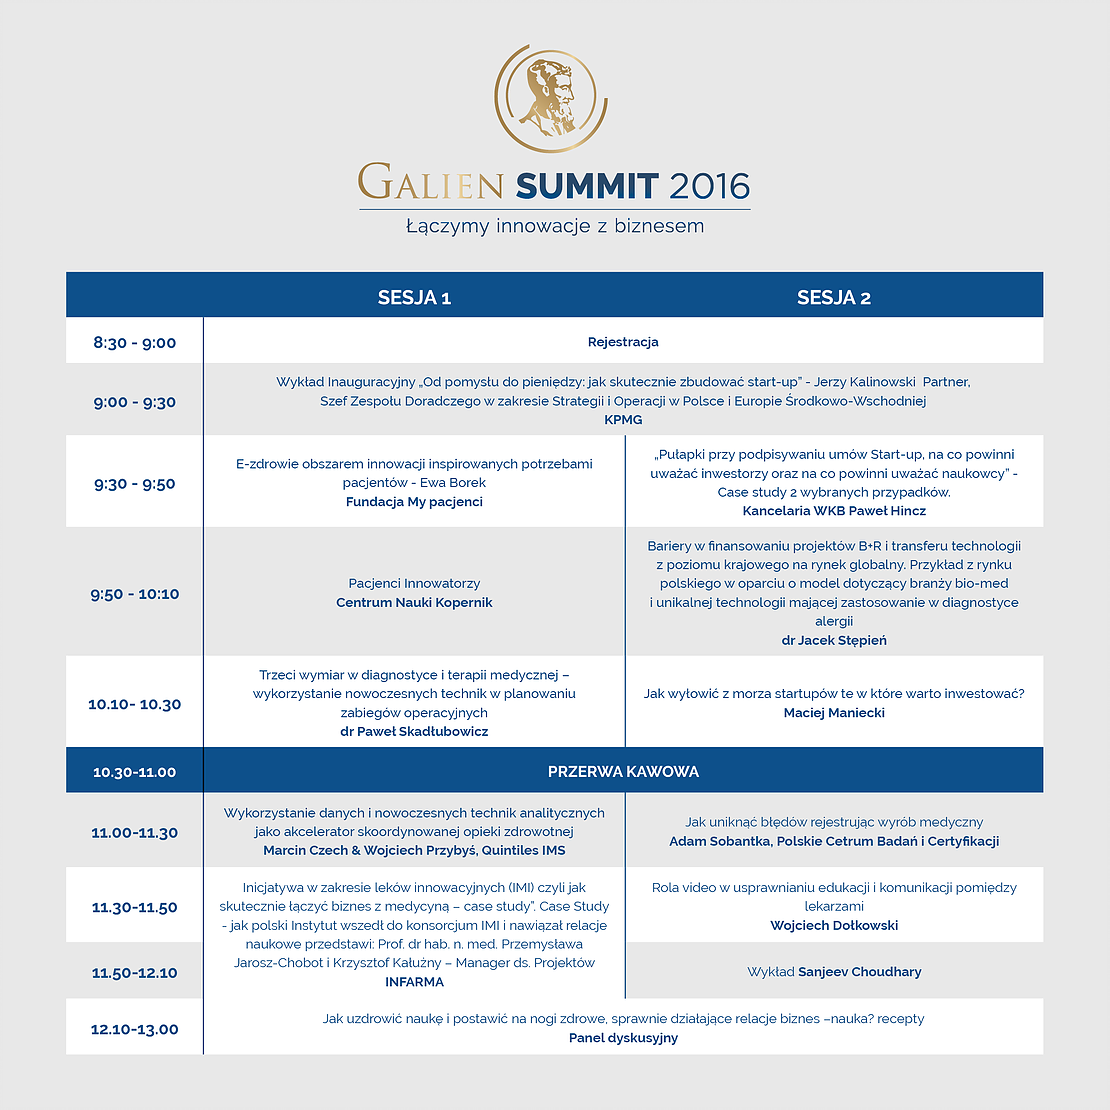 Galien Summit 2016 program